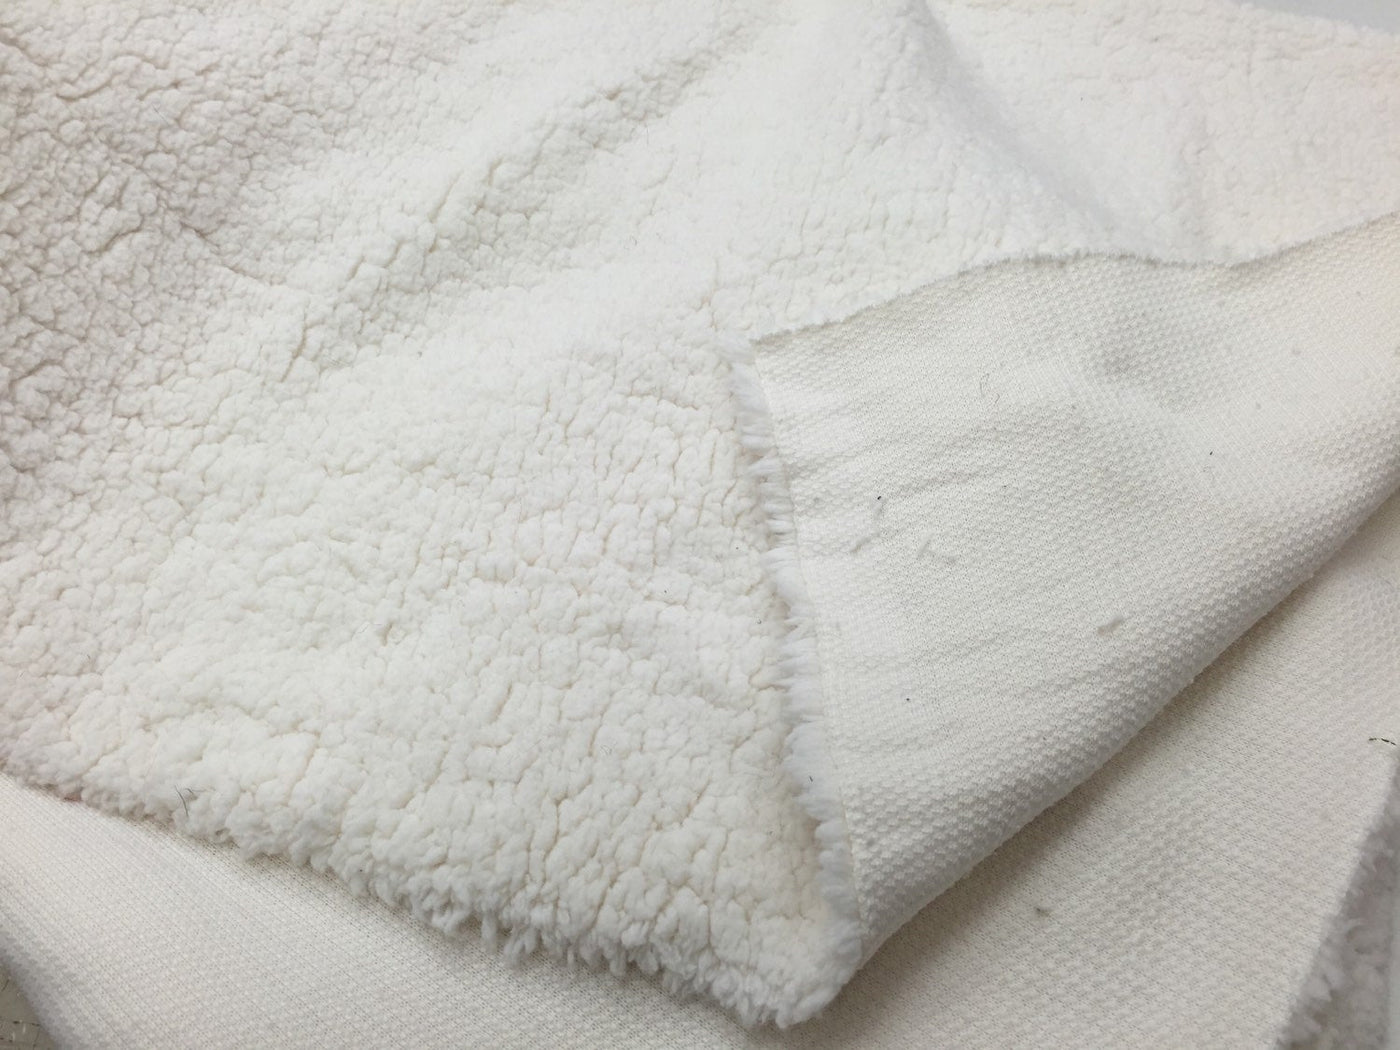 Dimple Fleece Fabric Super Soft Cuddle Fleece Baby Blanket